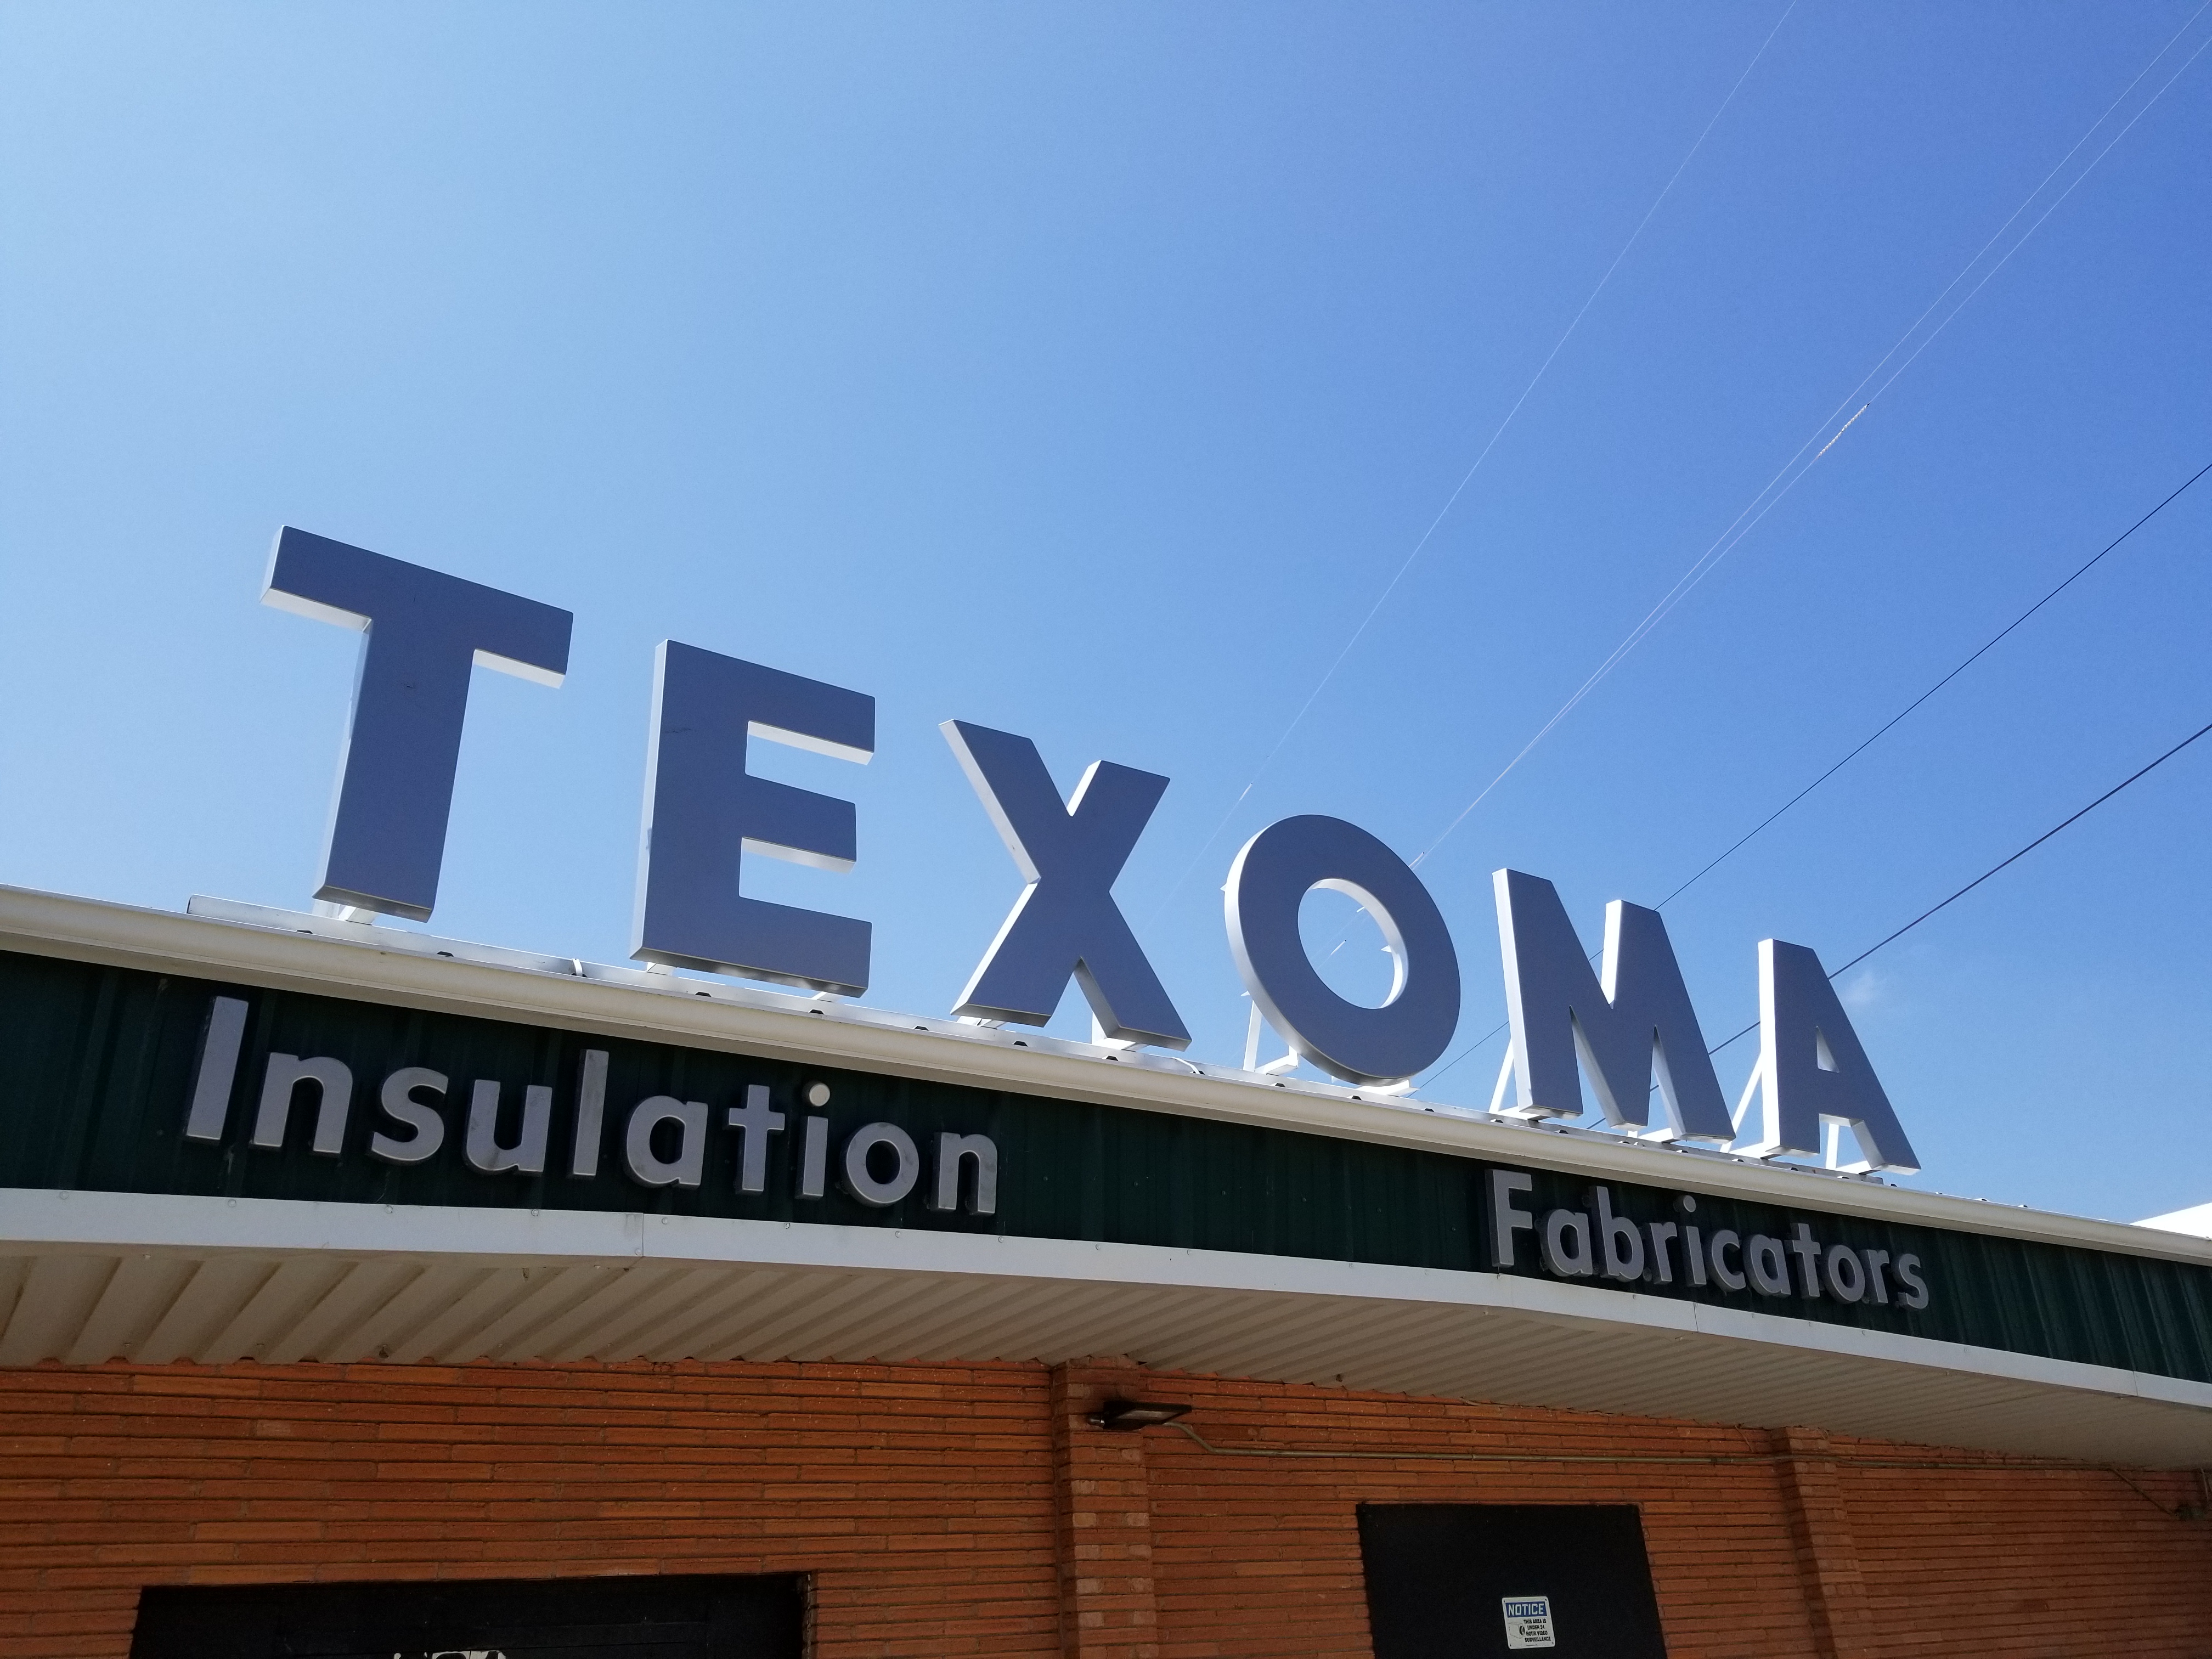 Texoma Fabrication